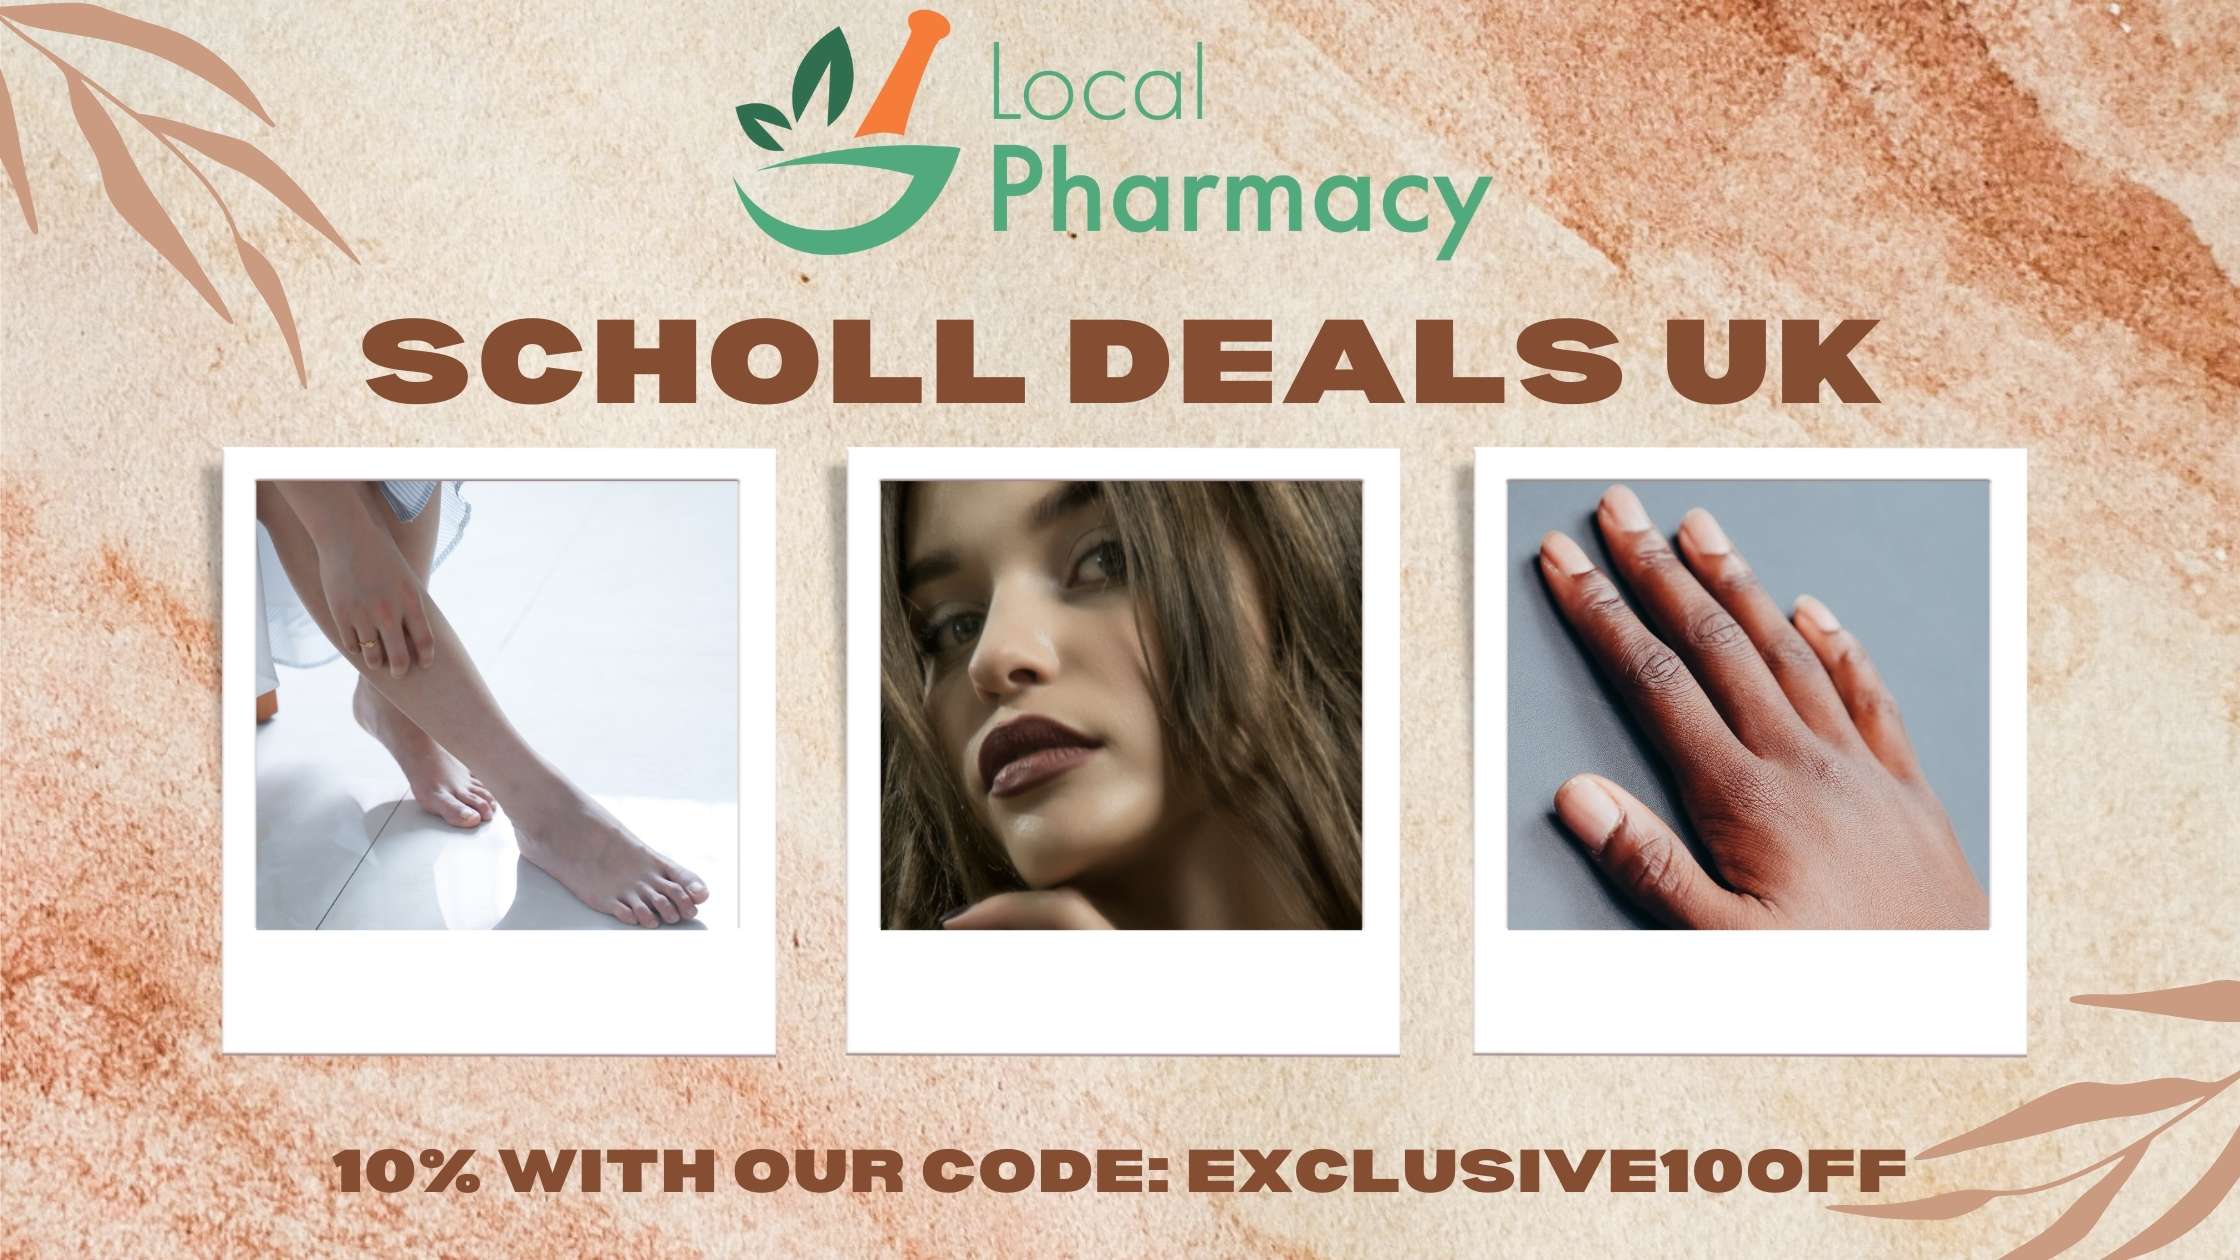 Scholl coupon code and deals uk